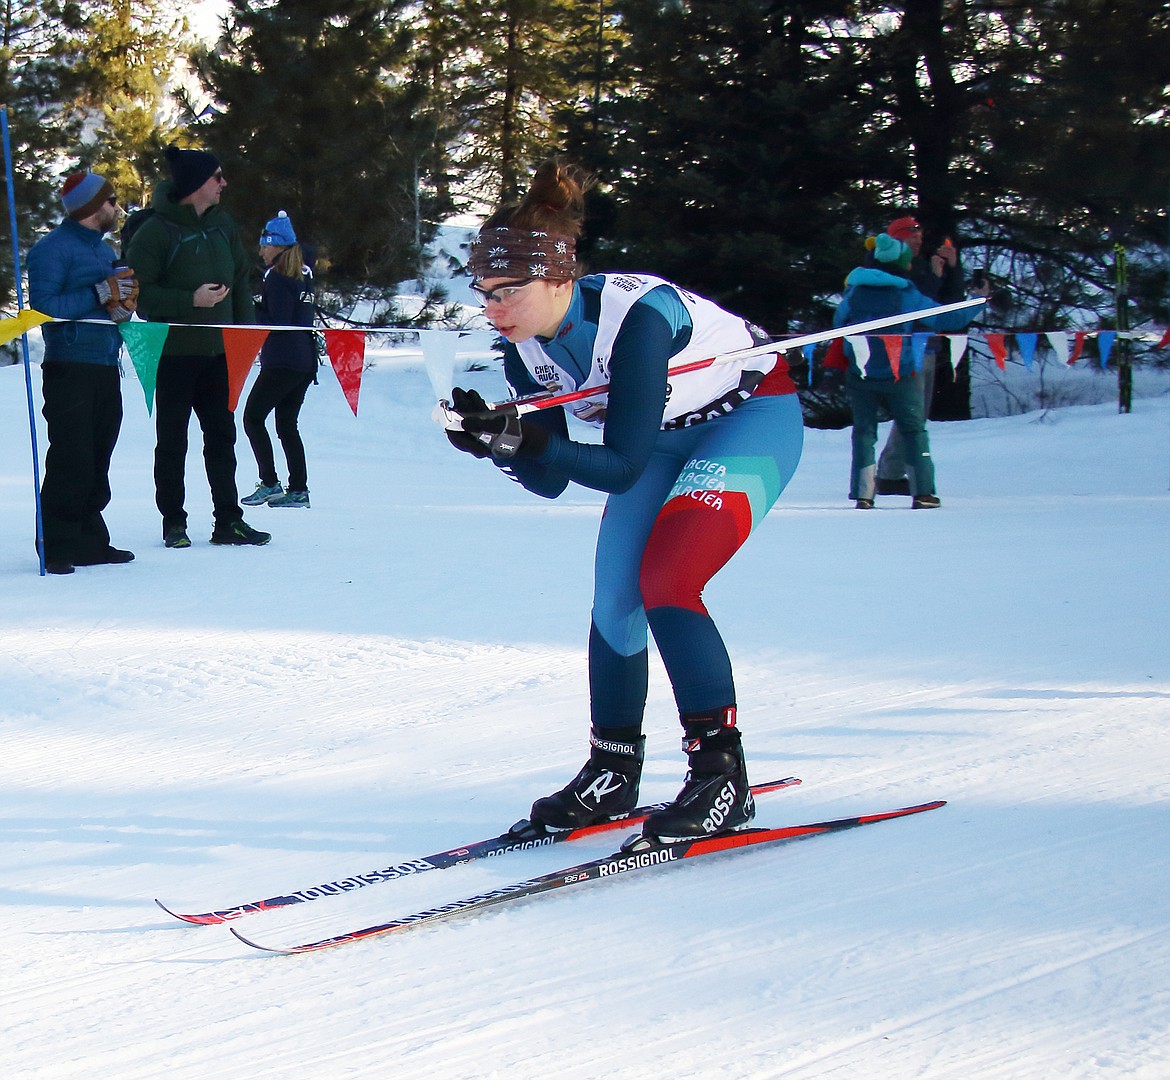 Glacier Nordic athlete Charlotte Lehman races in McCall, Idaho. (Photo courtesy Wayne Petsch)